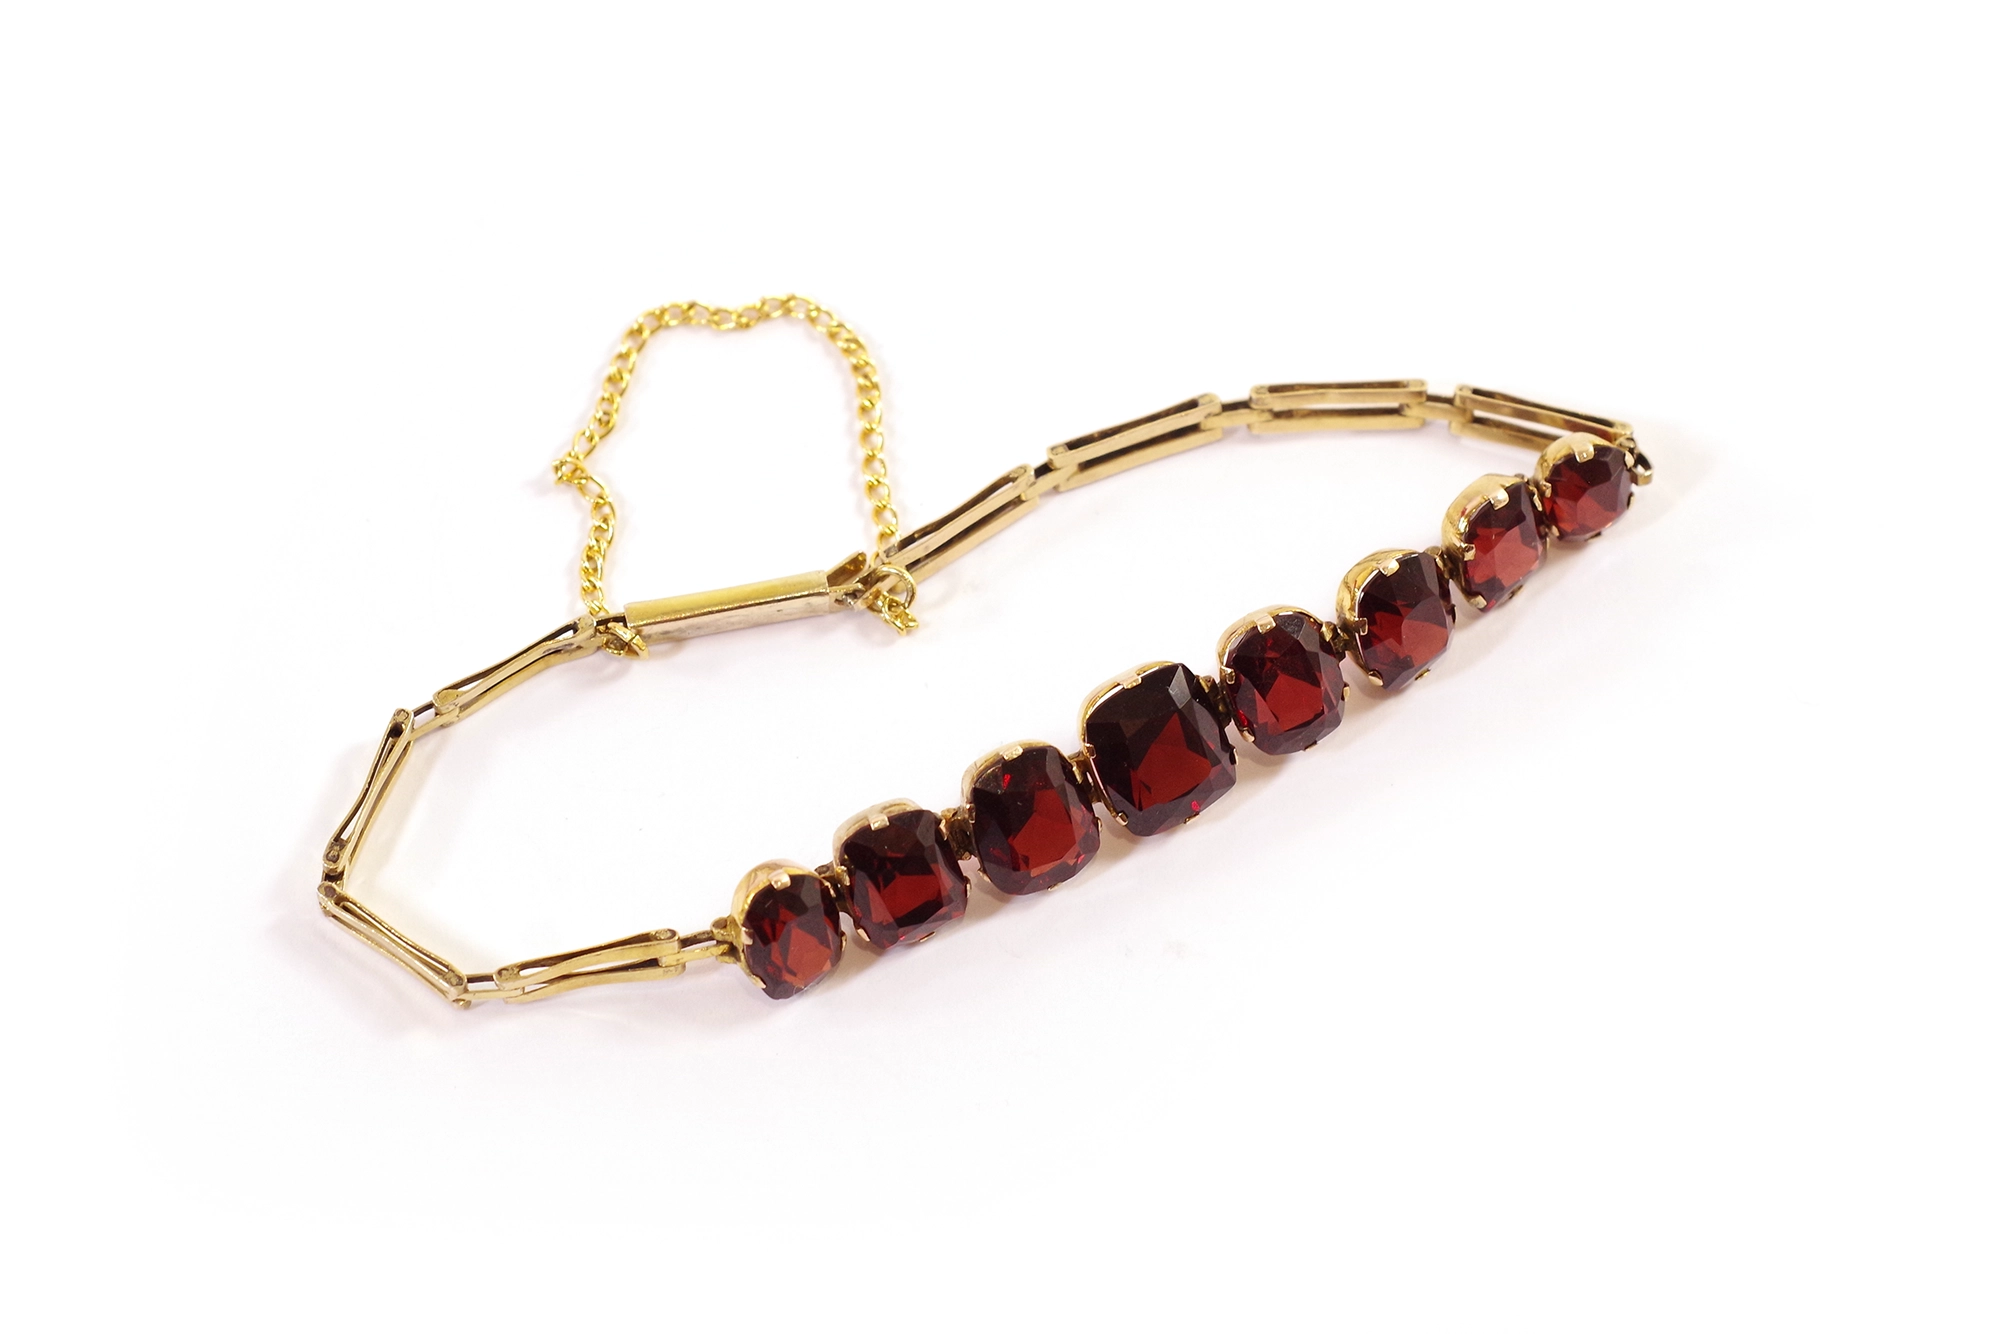 Sold at auction Antique Garnet Bracelet Auction Number 2323 Lot Number 265  | Skinner Auctioneers